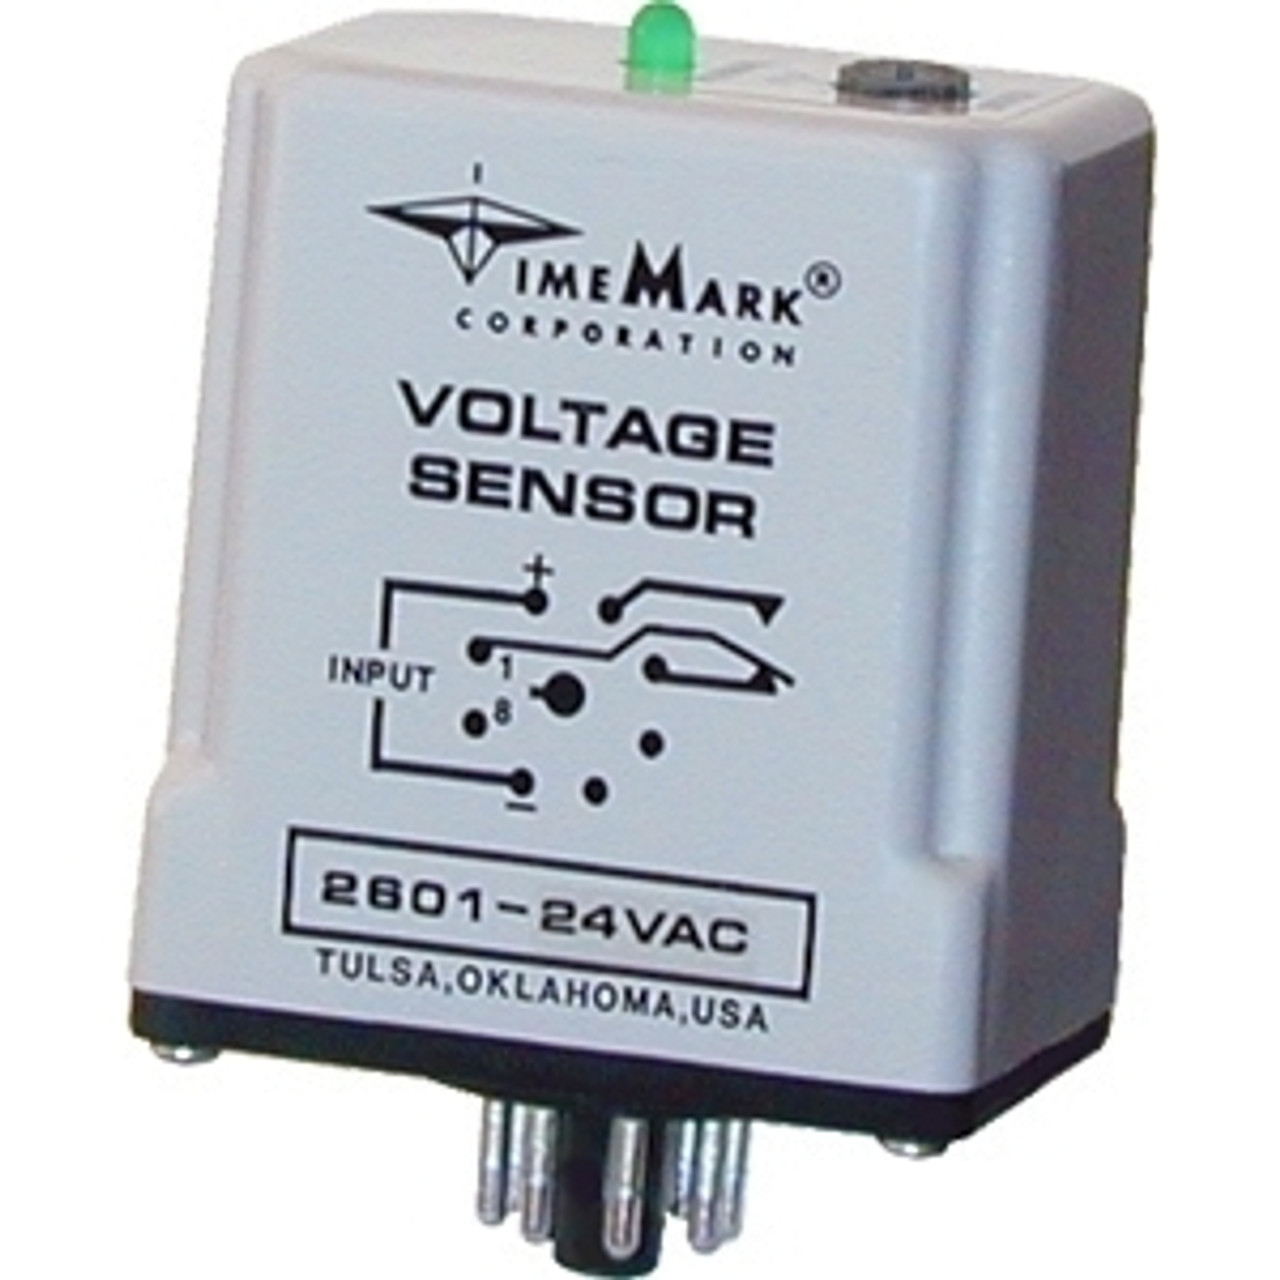 TimeMark 2601-24VDC Voltage Monitor Relays